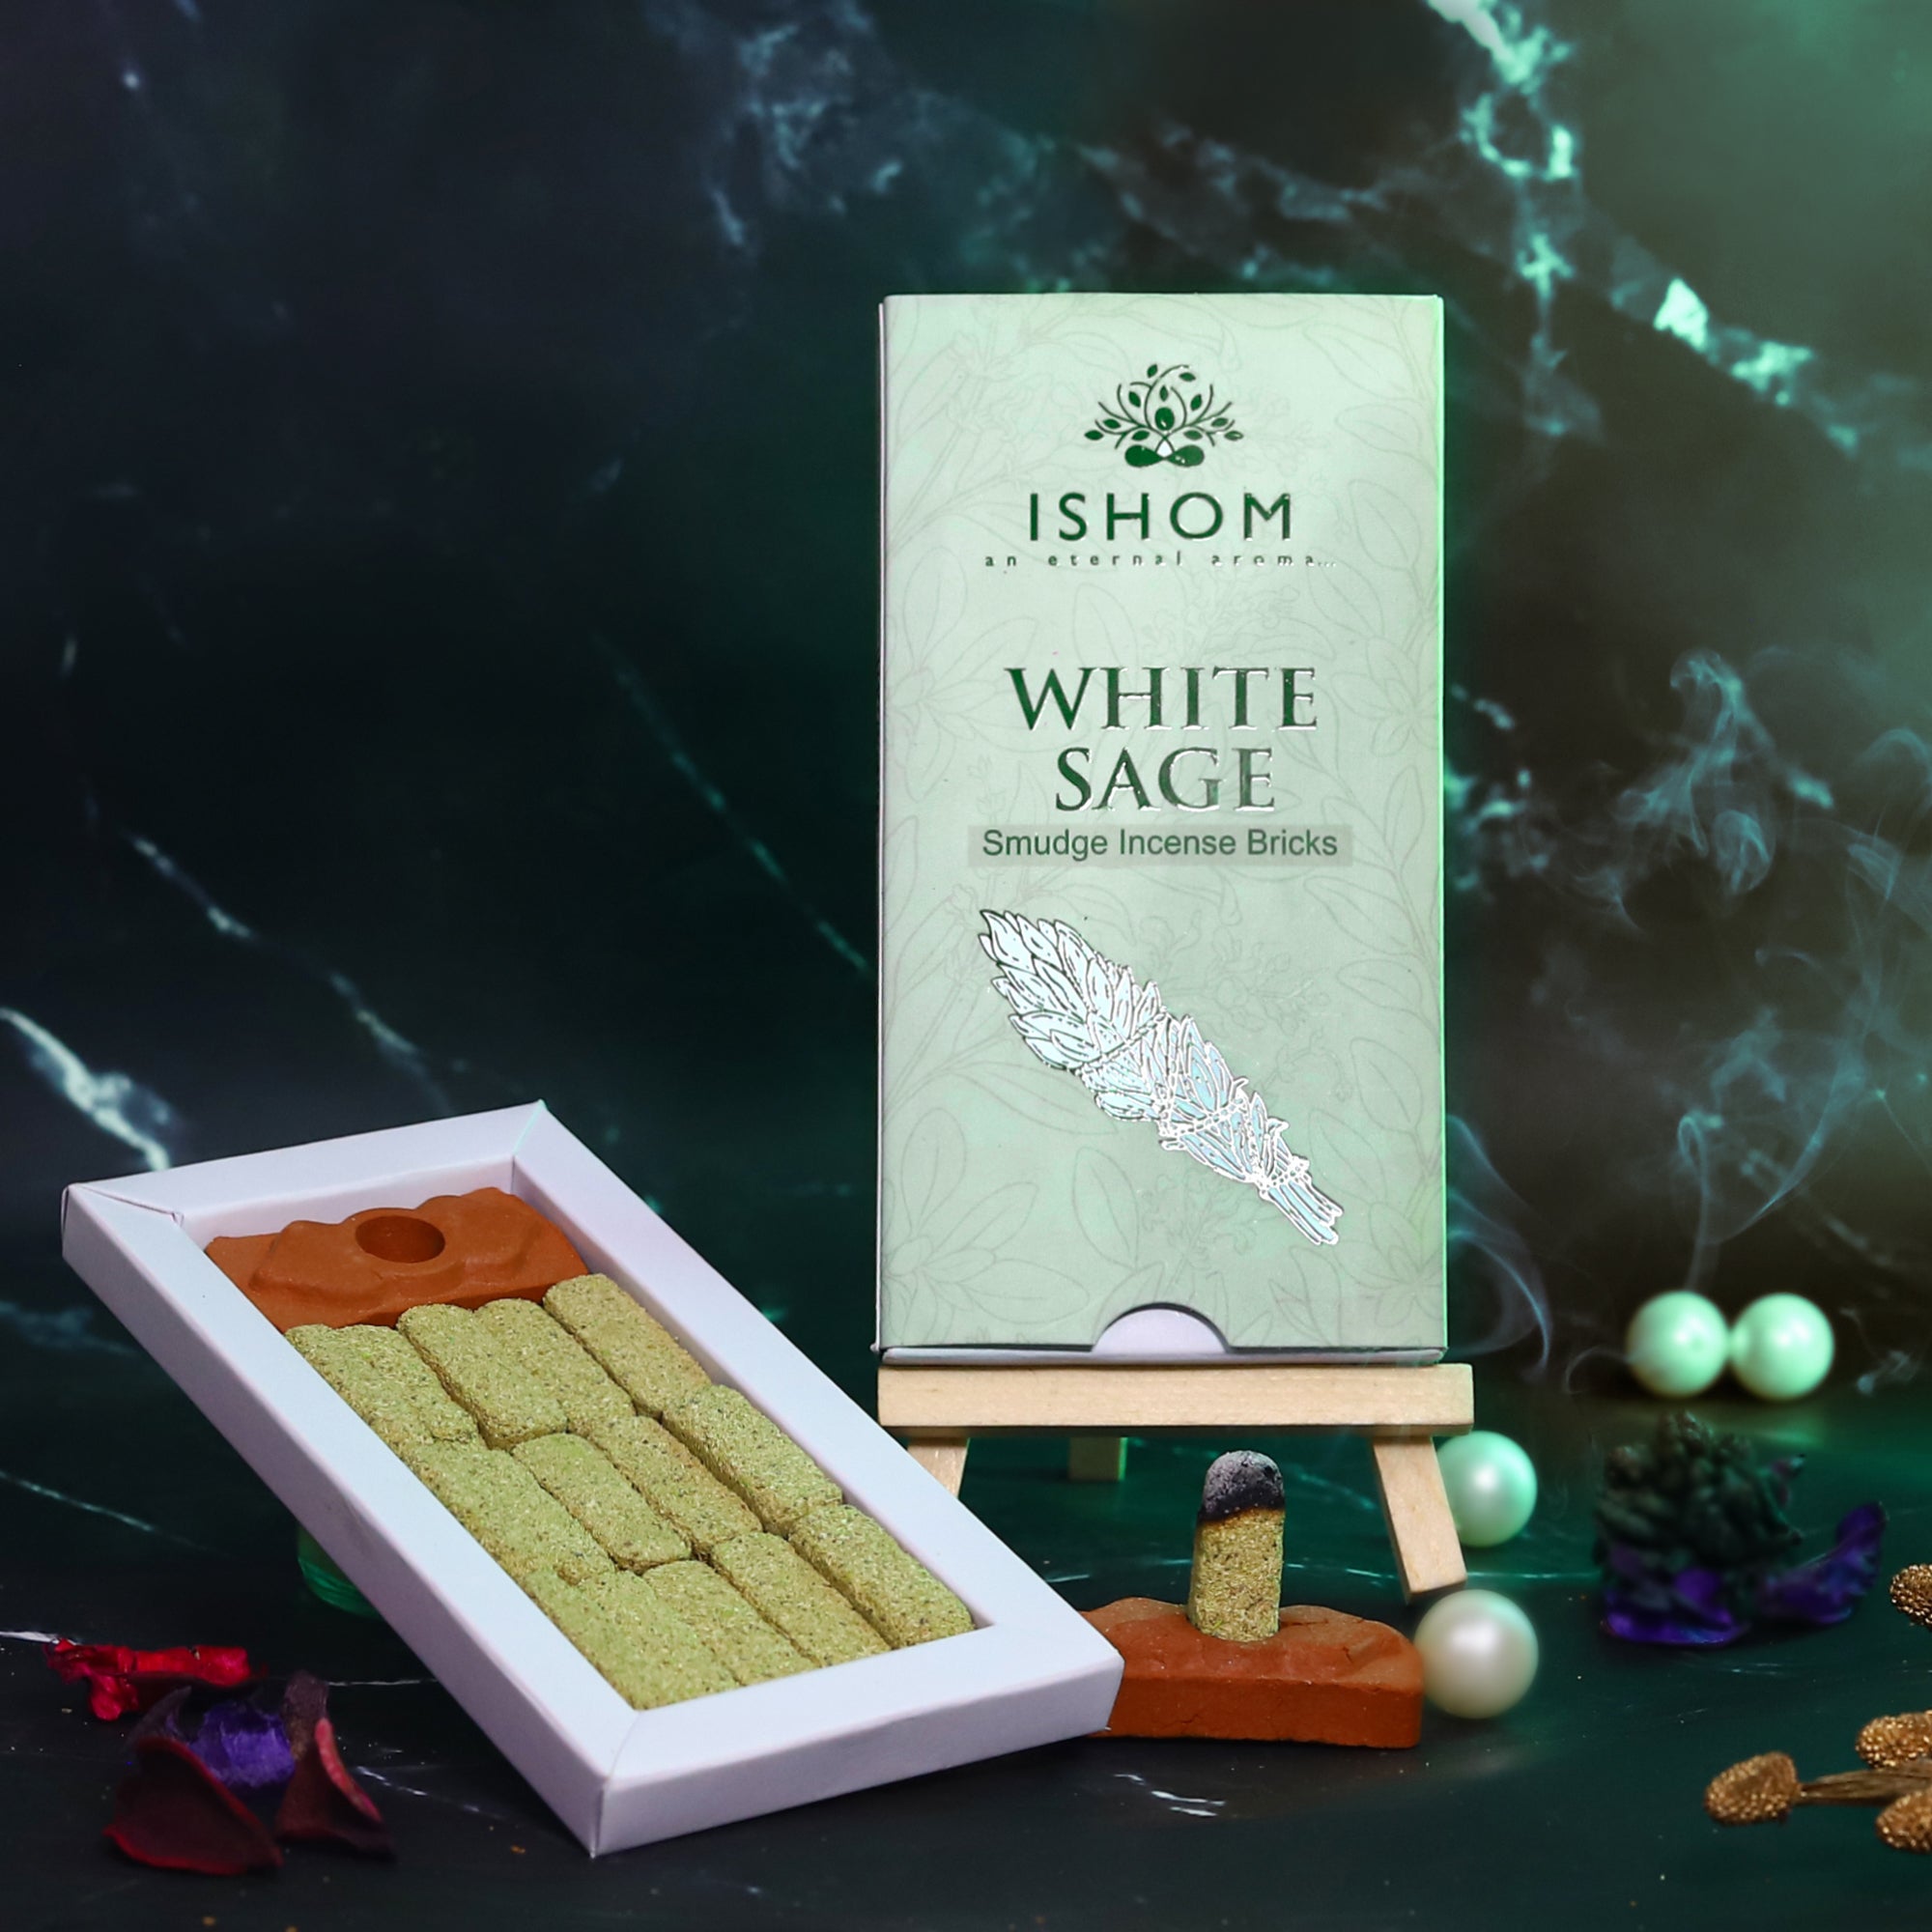 white sage smudge incense bricks